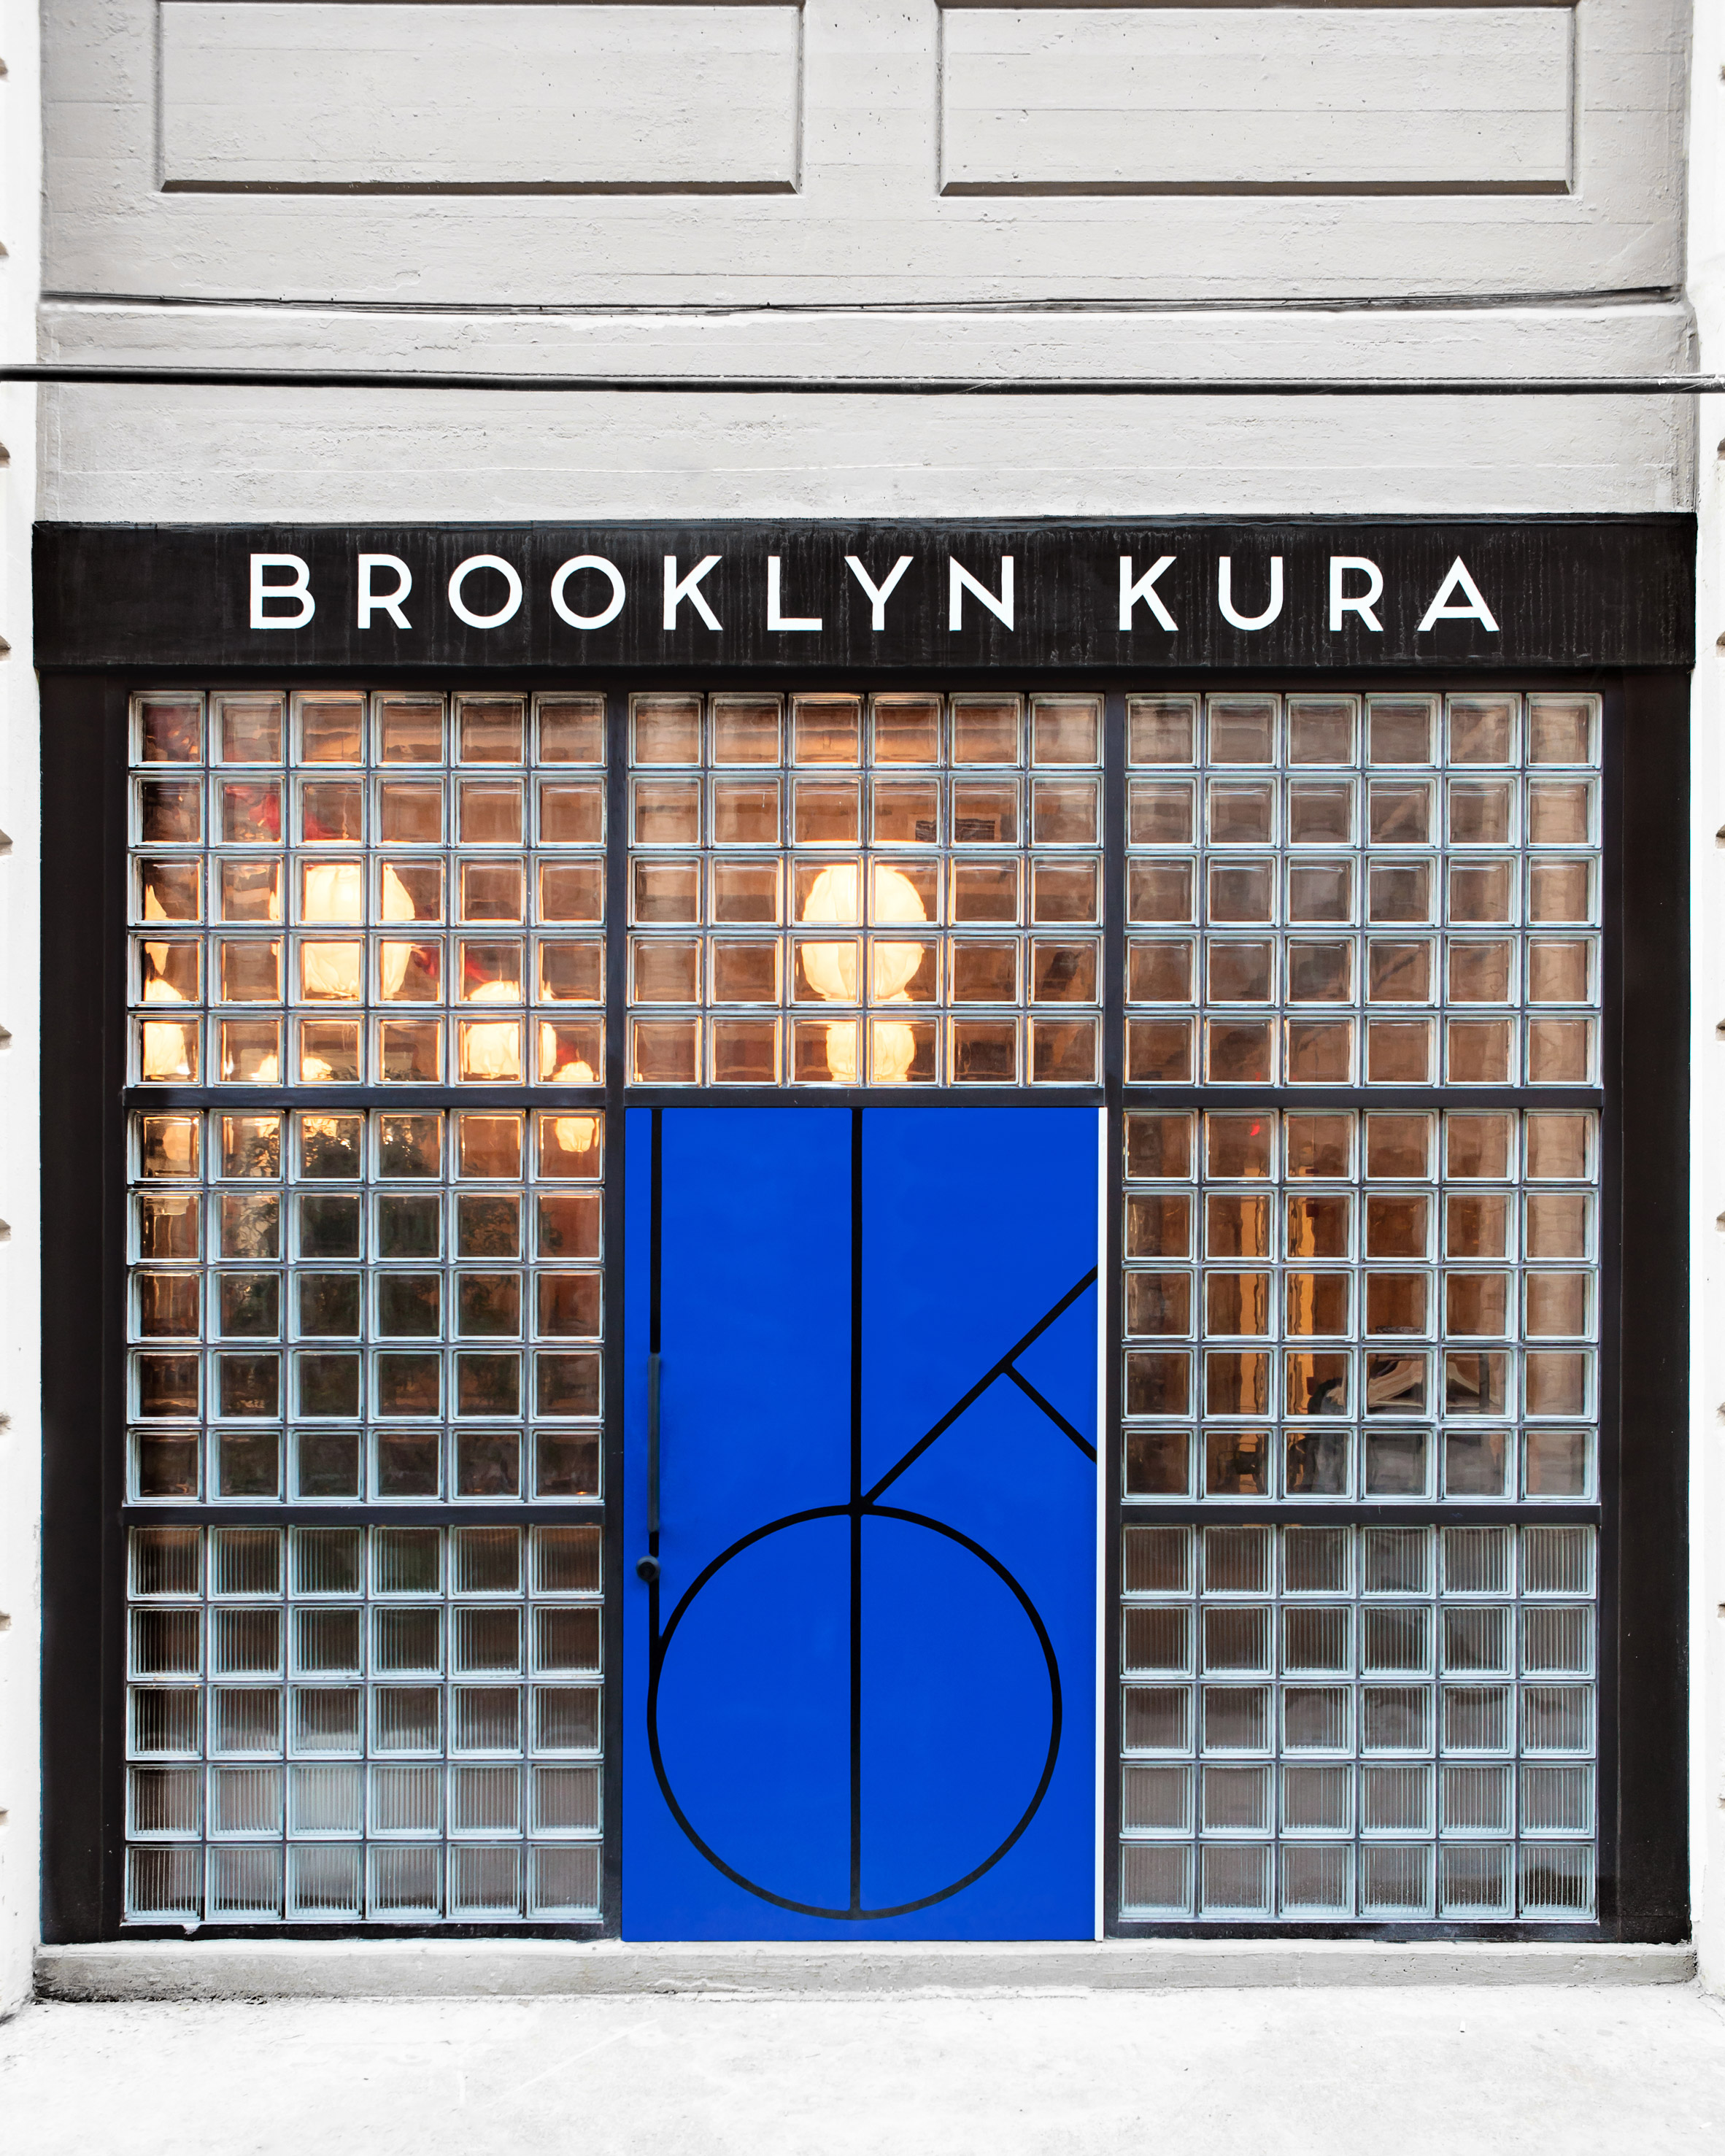 Brooklyn Kura by Brian Polen and Brandon